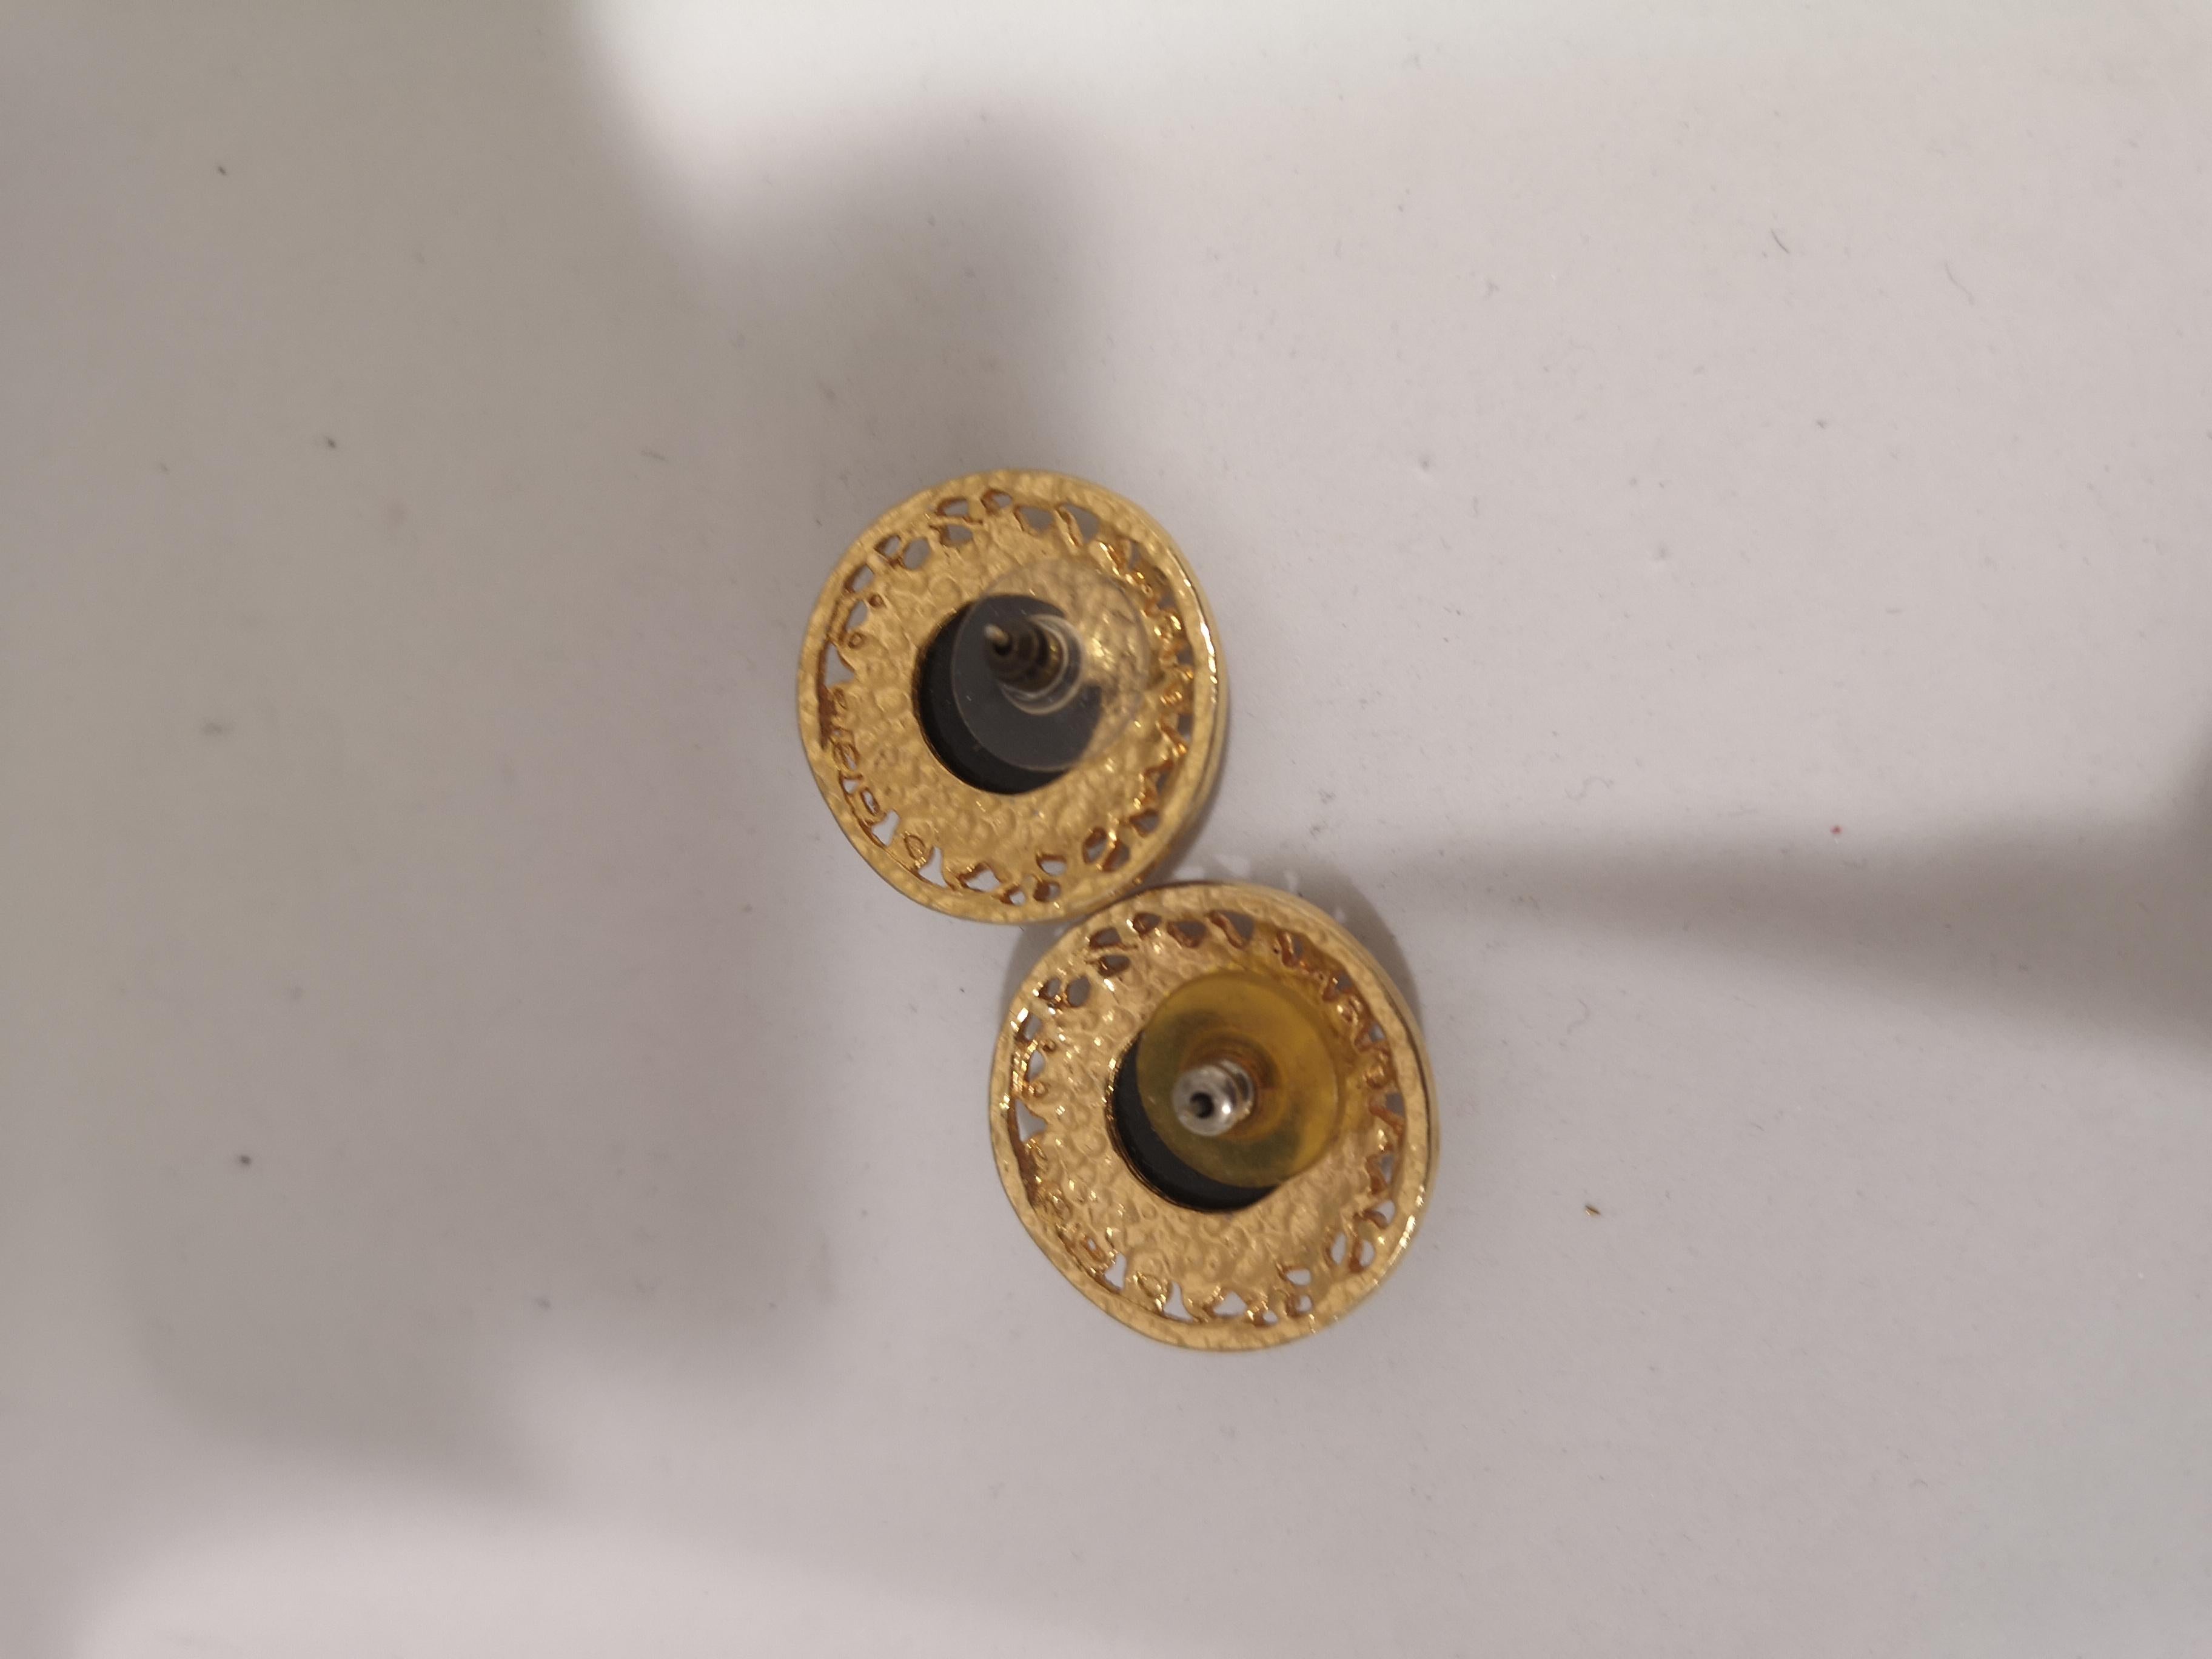 Vintage black gold earrings
3 x 3 cm